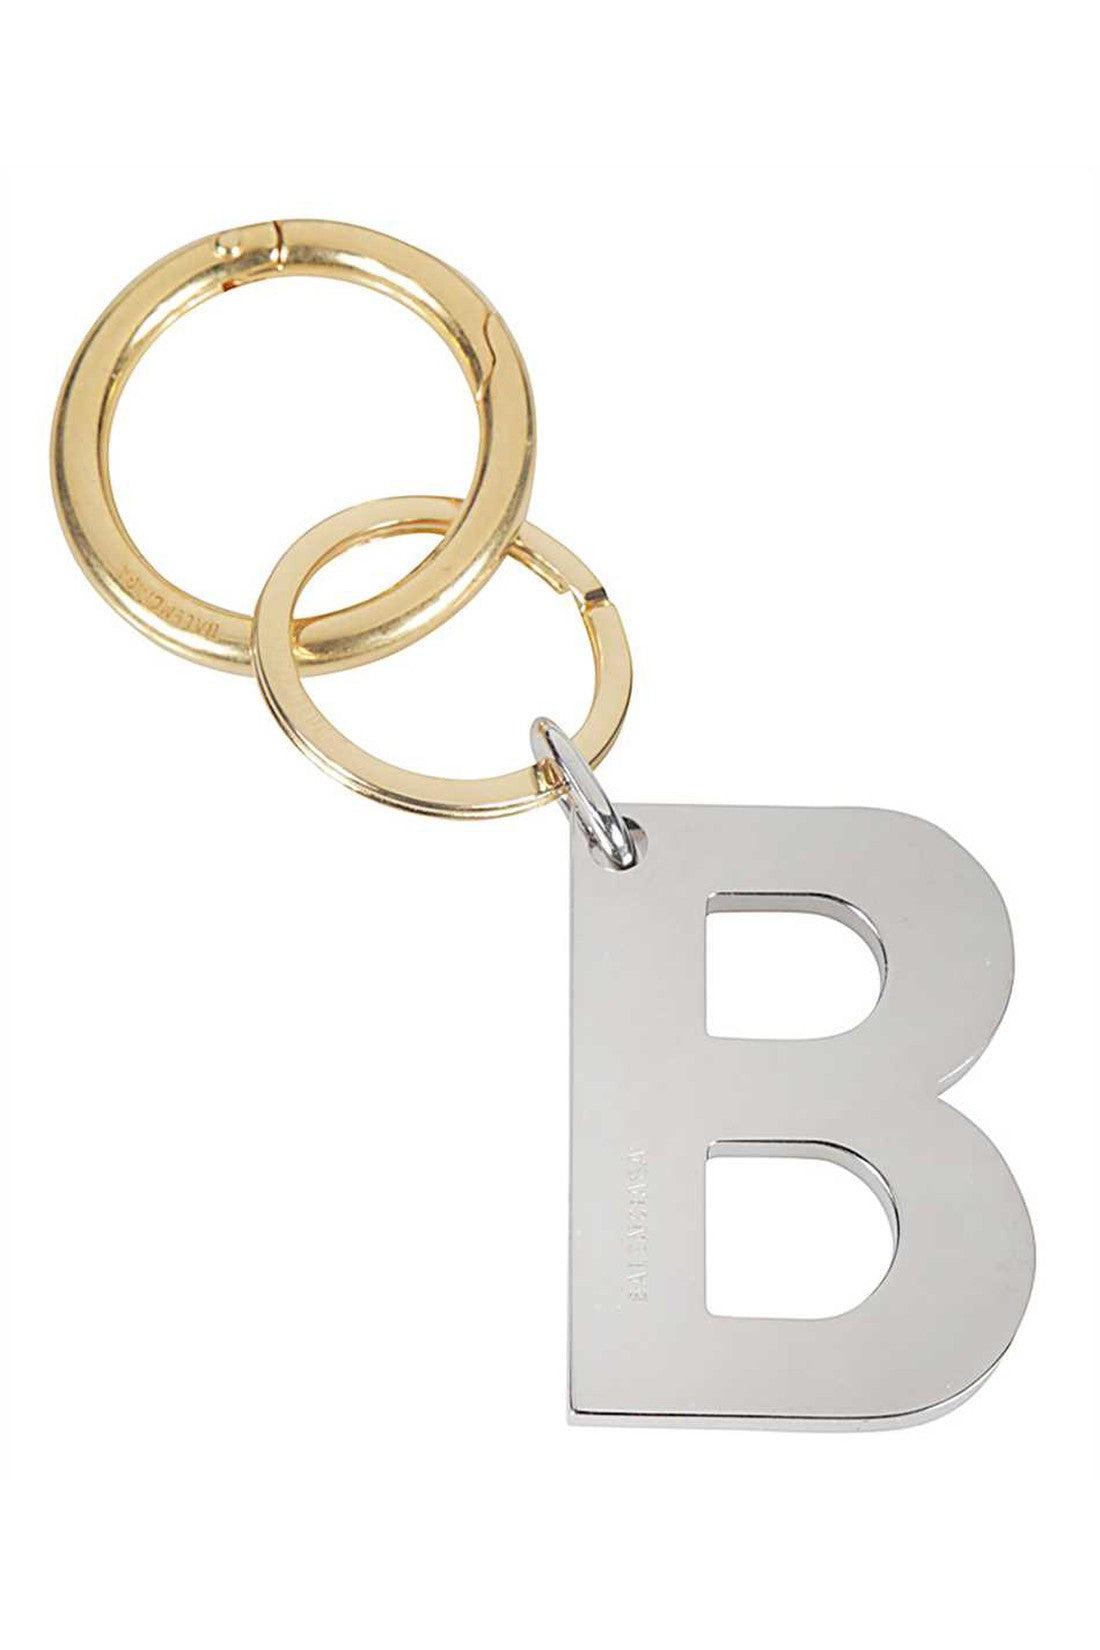 Brass key-holder